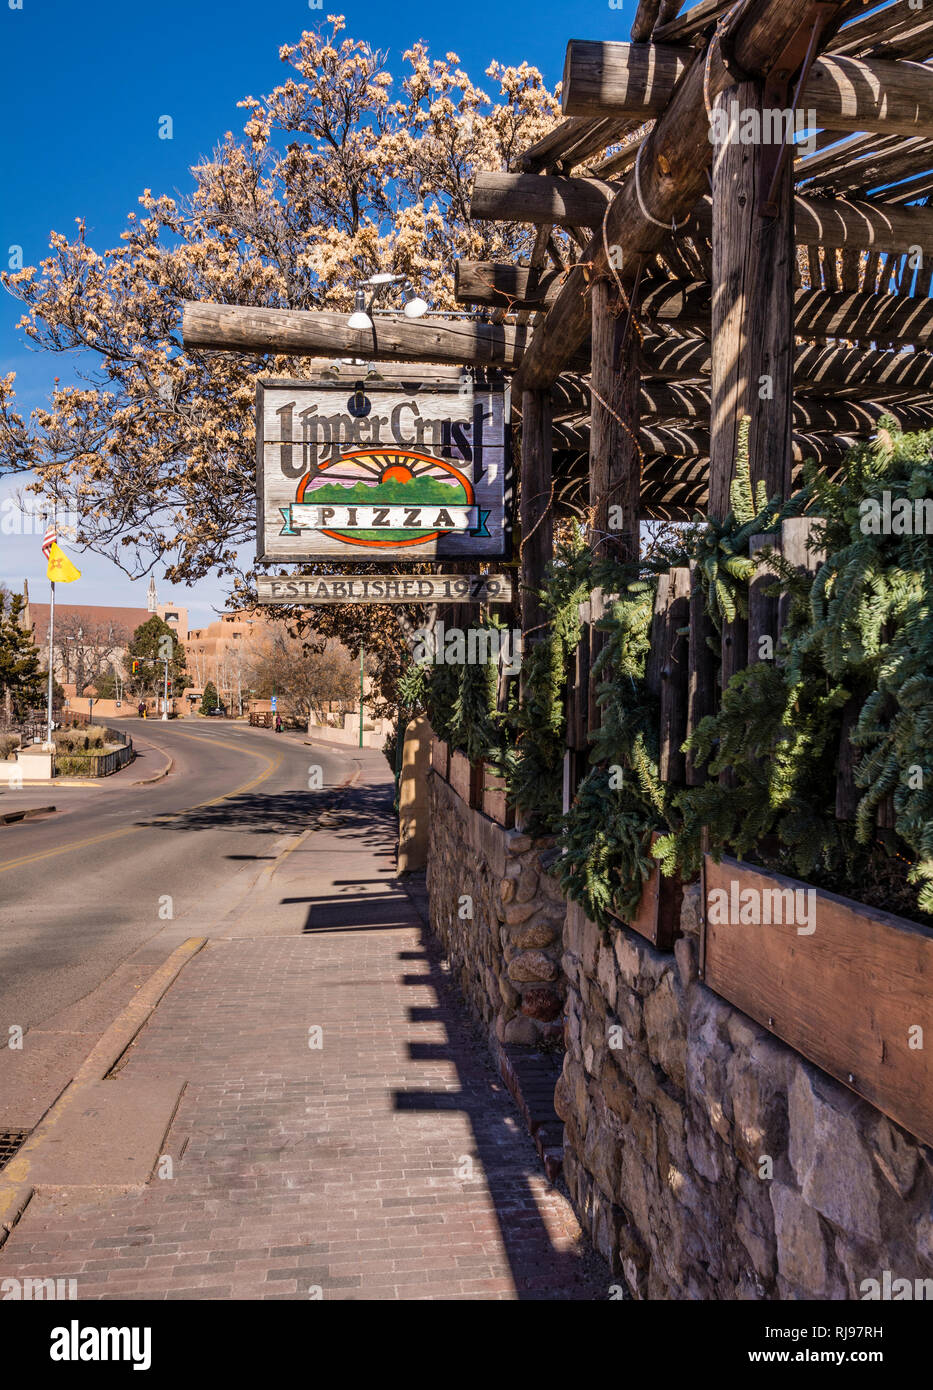 Santa Fe New Mexico street view and Upper Crust Pizza Restaurant on Old Santa Fe Trail. Stock Photo